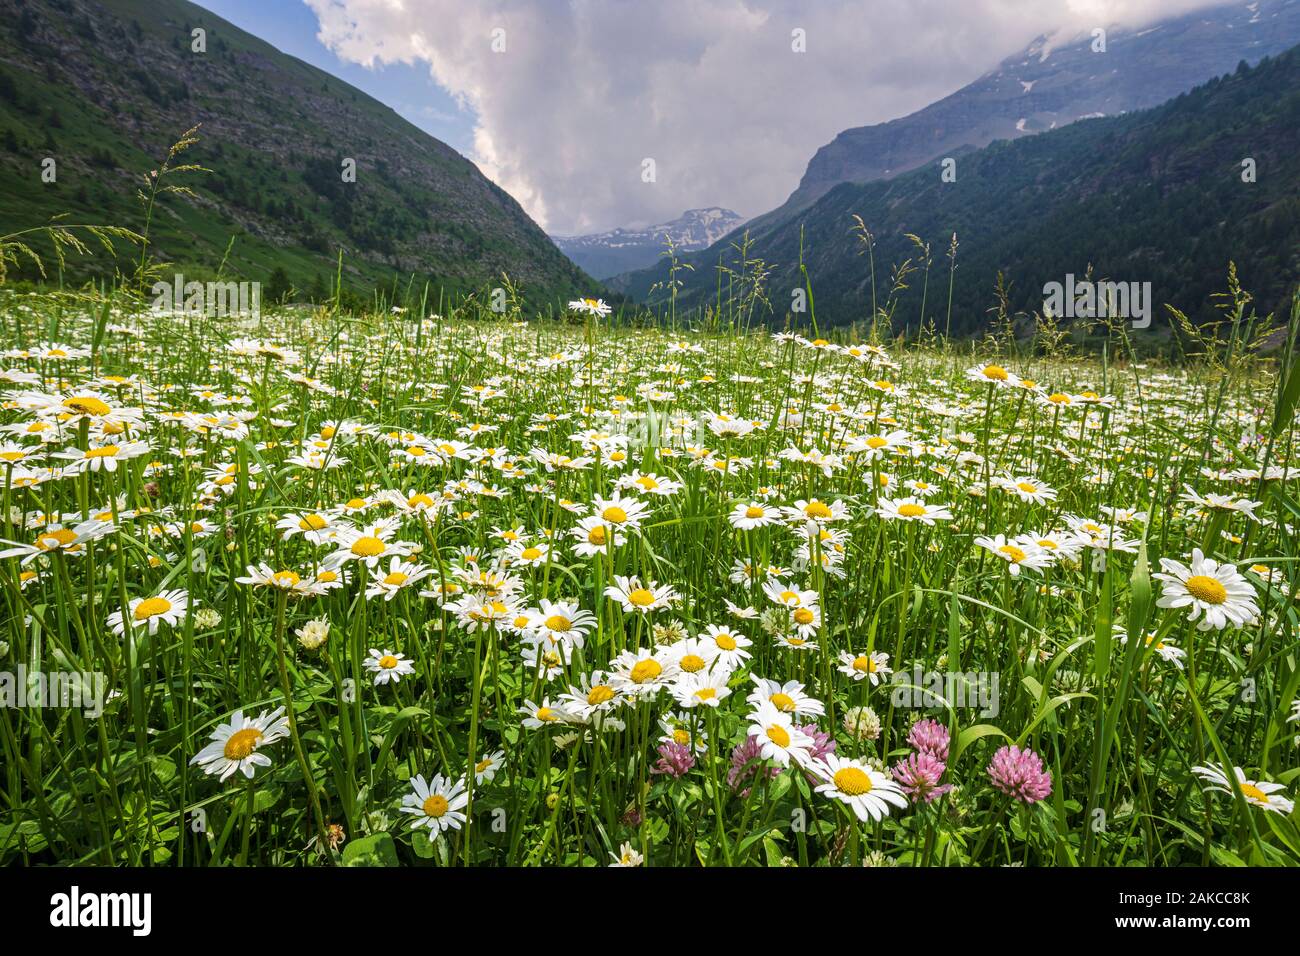 France, Hautes Alpes, Ecrins National Park, Champsaur, Drac Noir valley, Prapic, flowerbed of Max Chrysanthemum (Leucanthemum vulgare) Stock Photo